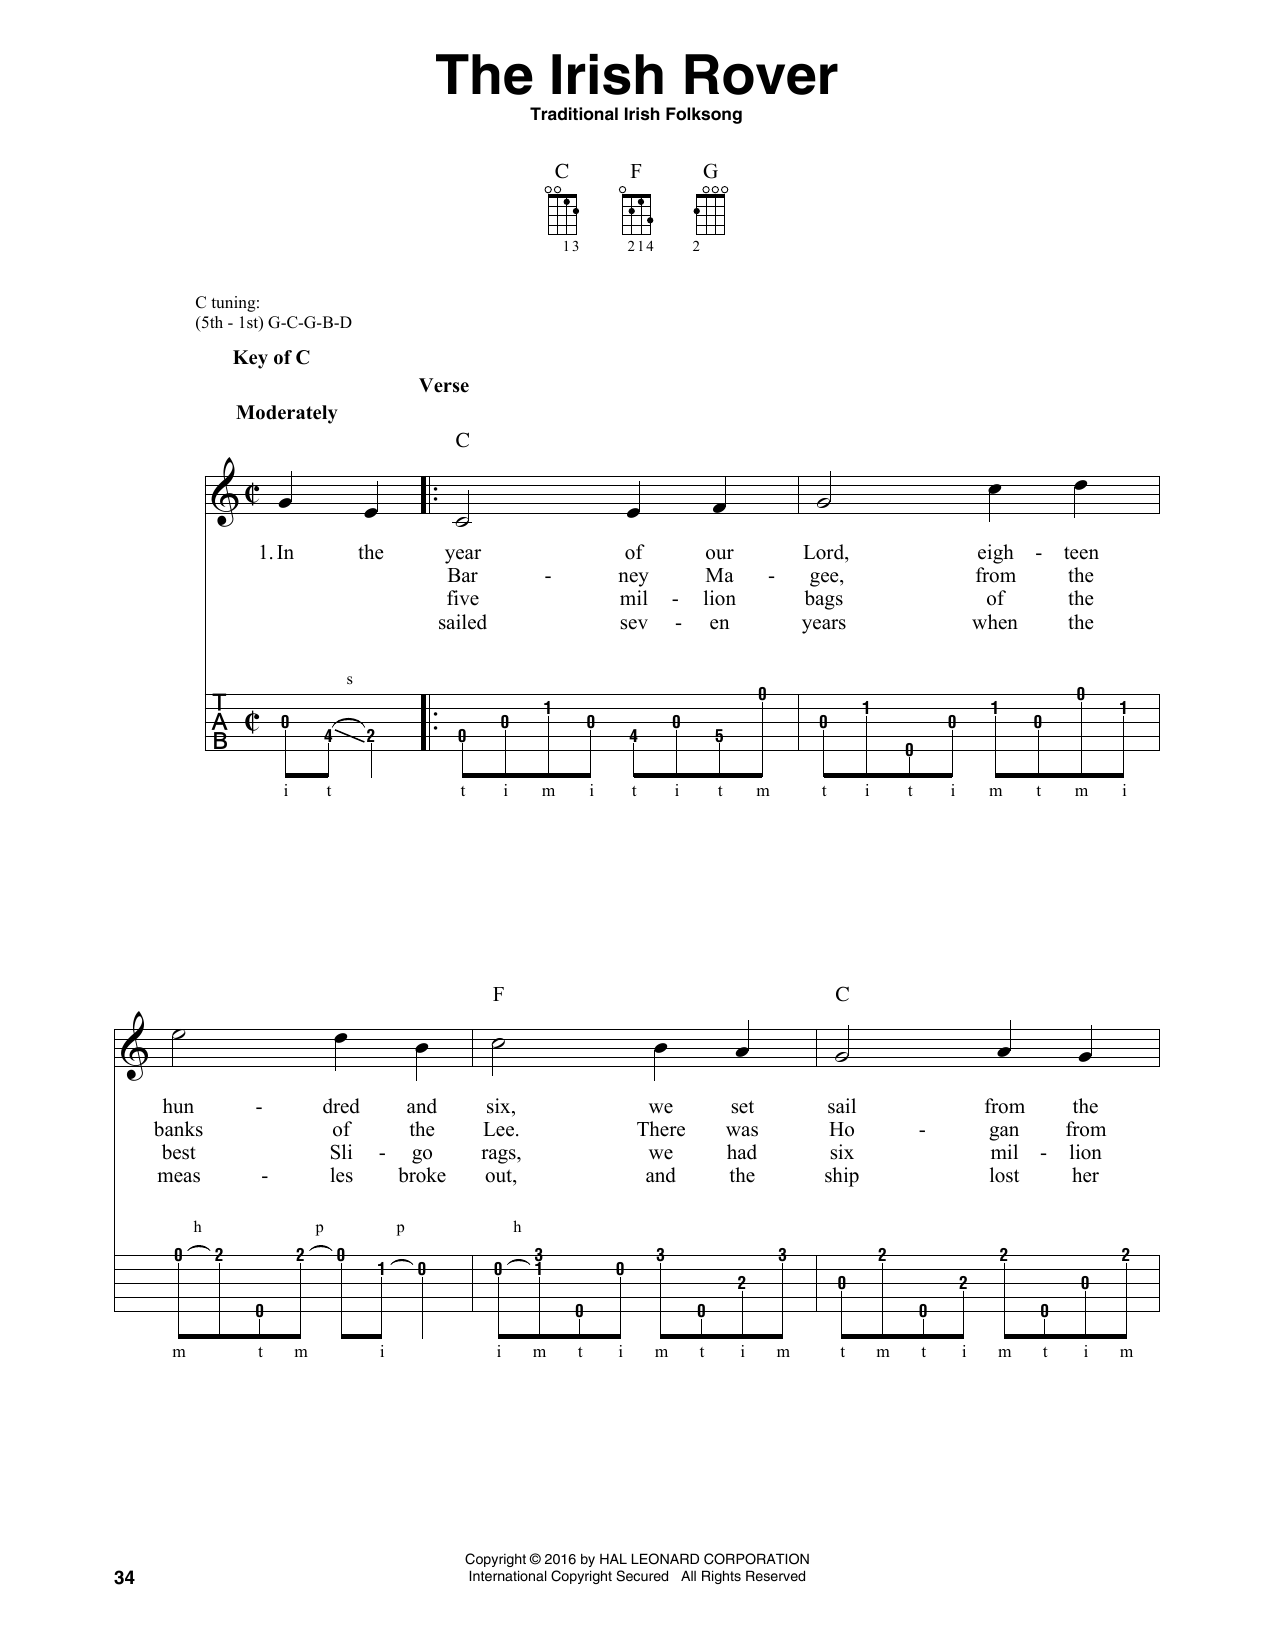 Traditional Irish Folk Song The Irish Rover sheet music notes and chords arranged for Banjo Tab